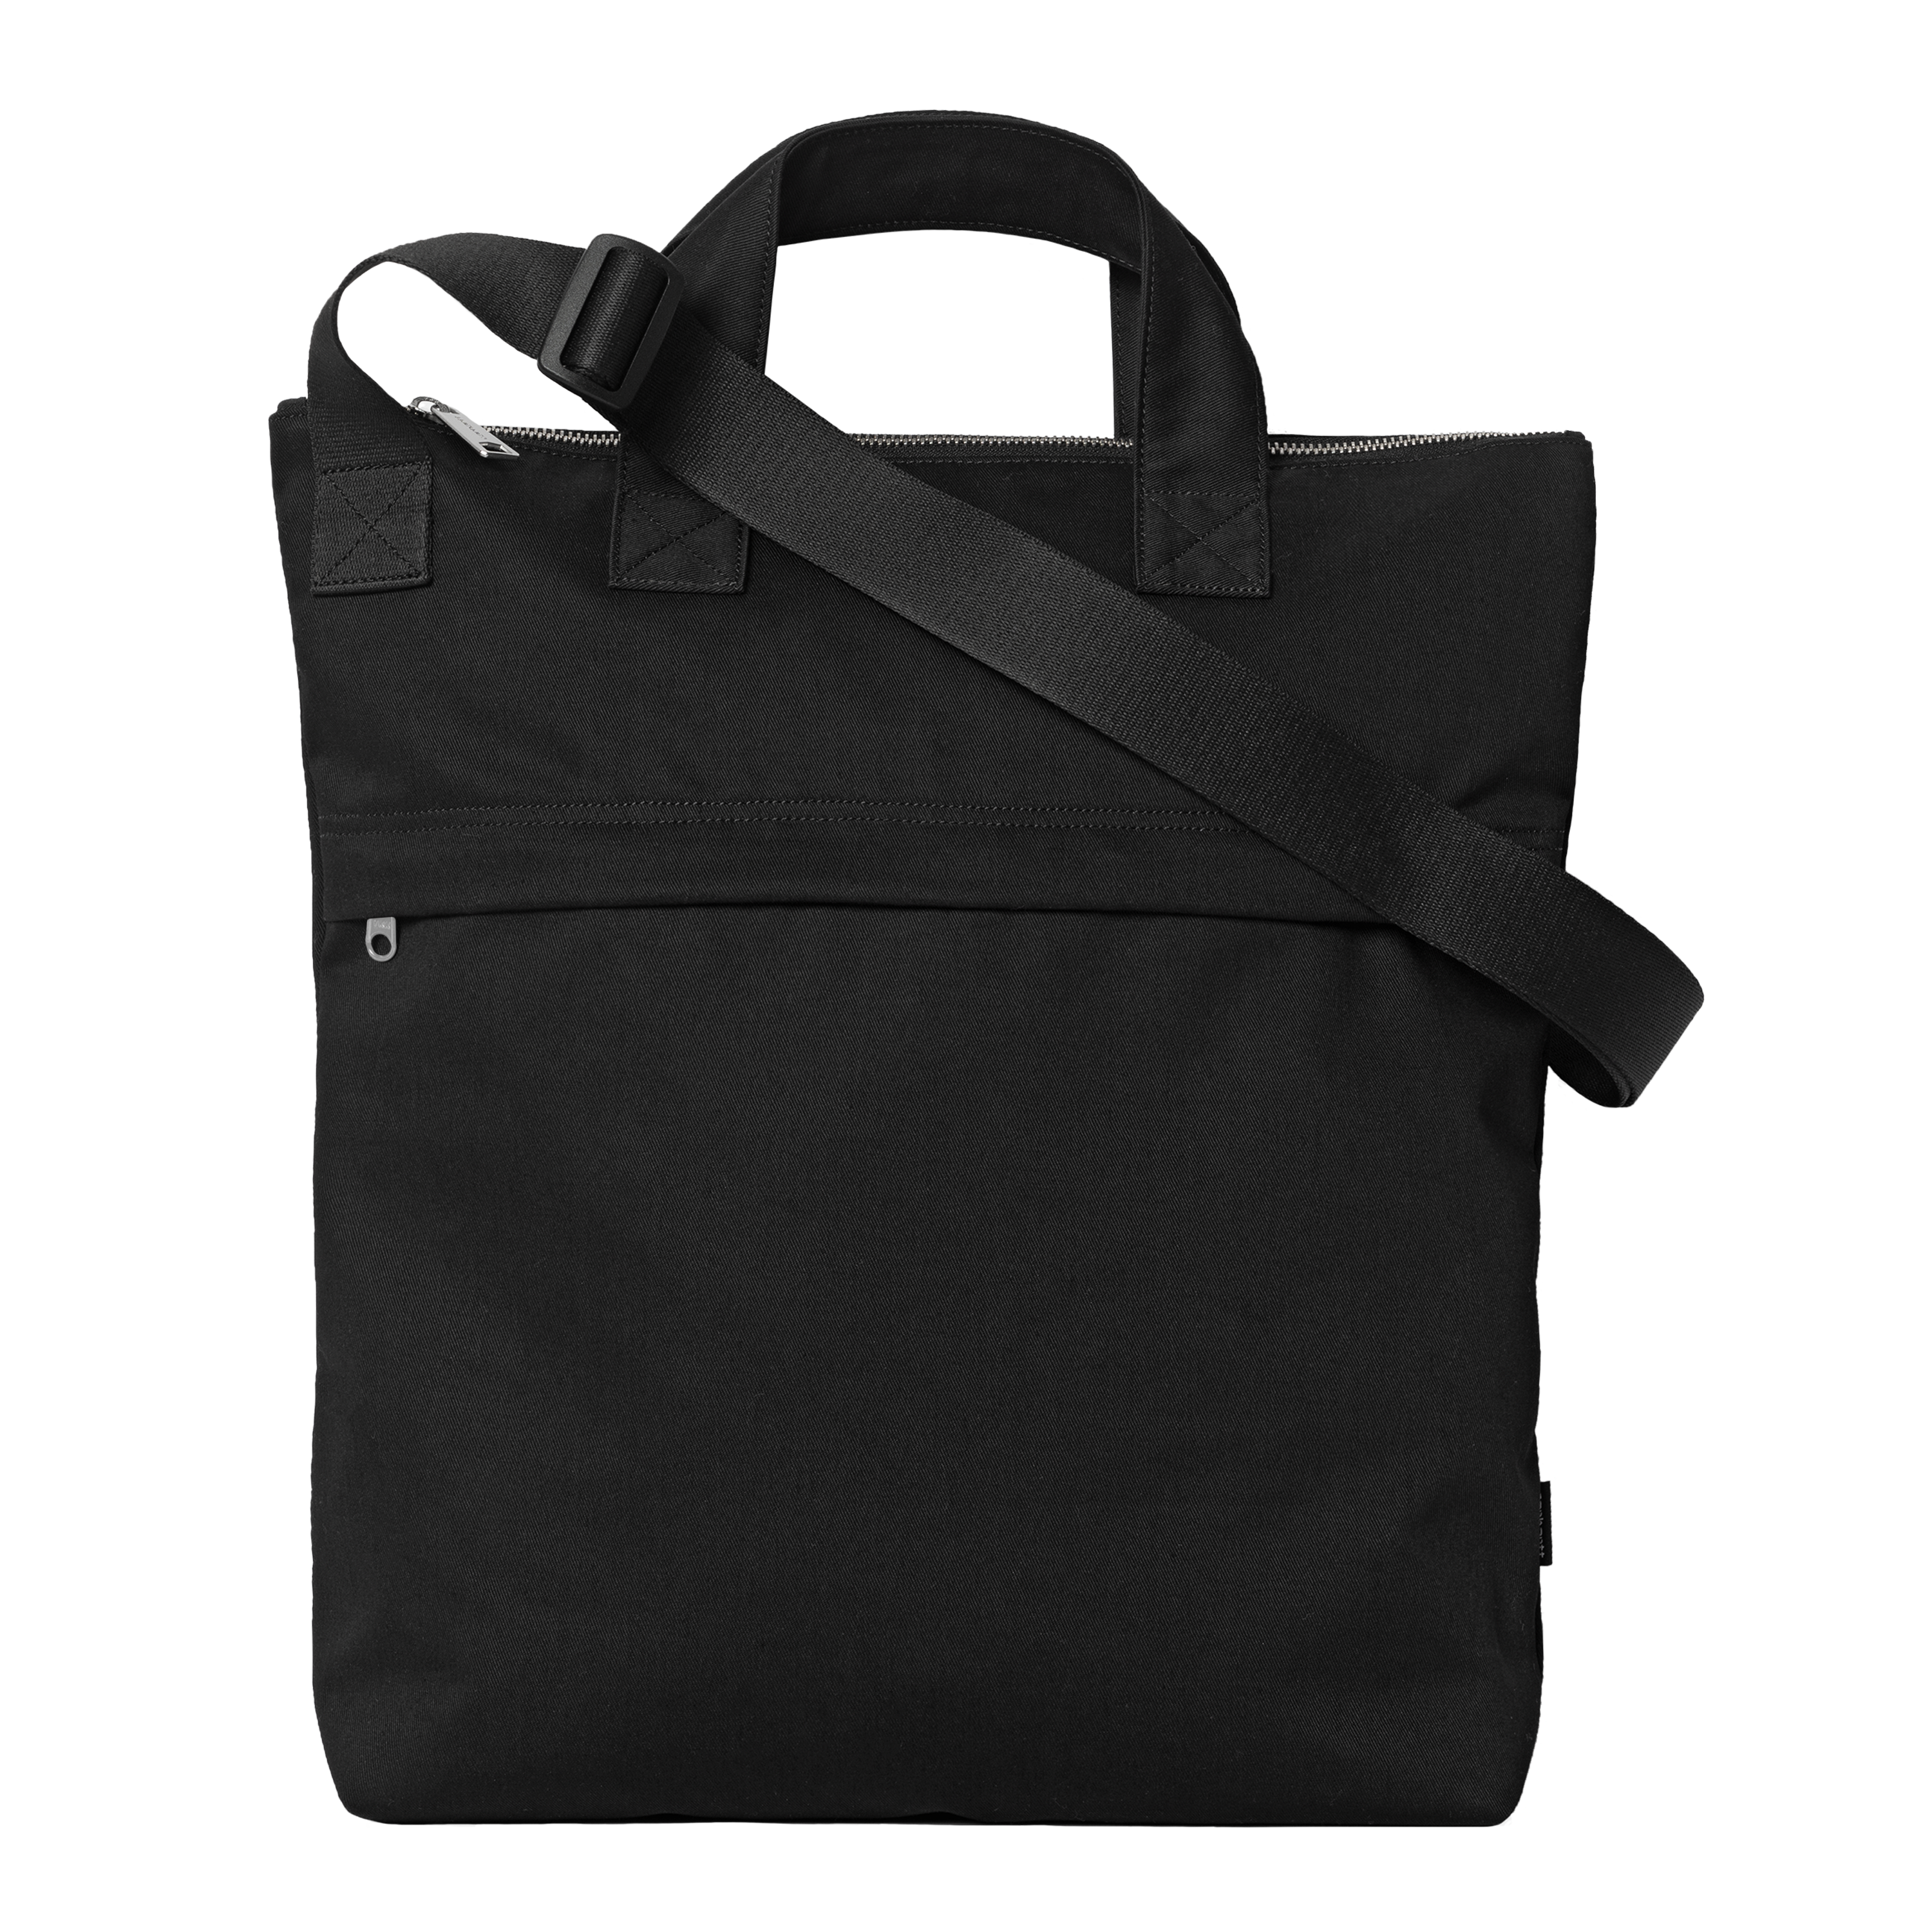 Carhartt WIP Newhaven Tote Bag in Black